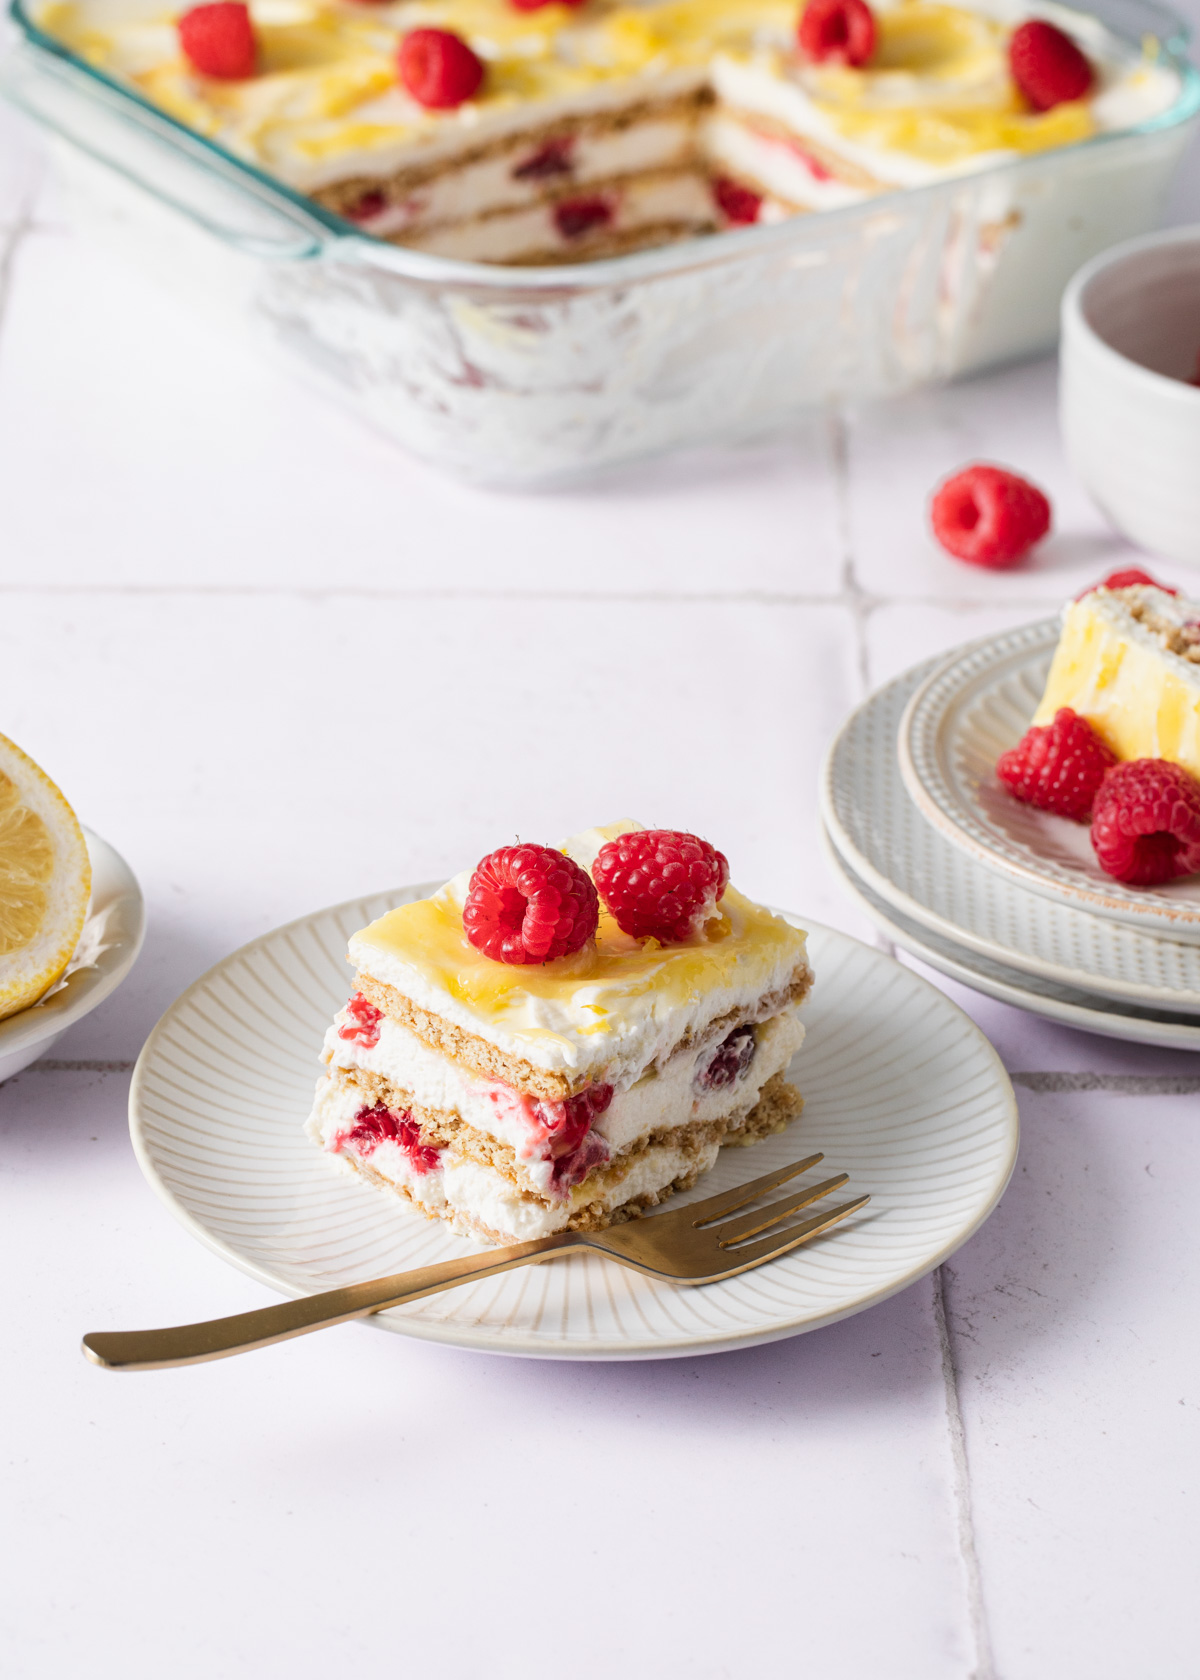 A slice of lemon icebox cake with fresh raspberries on a plate.